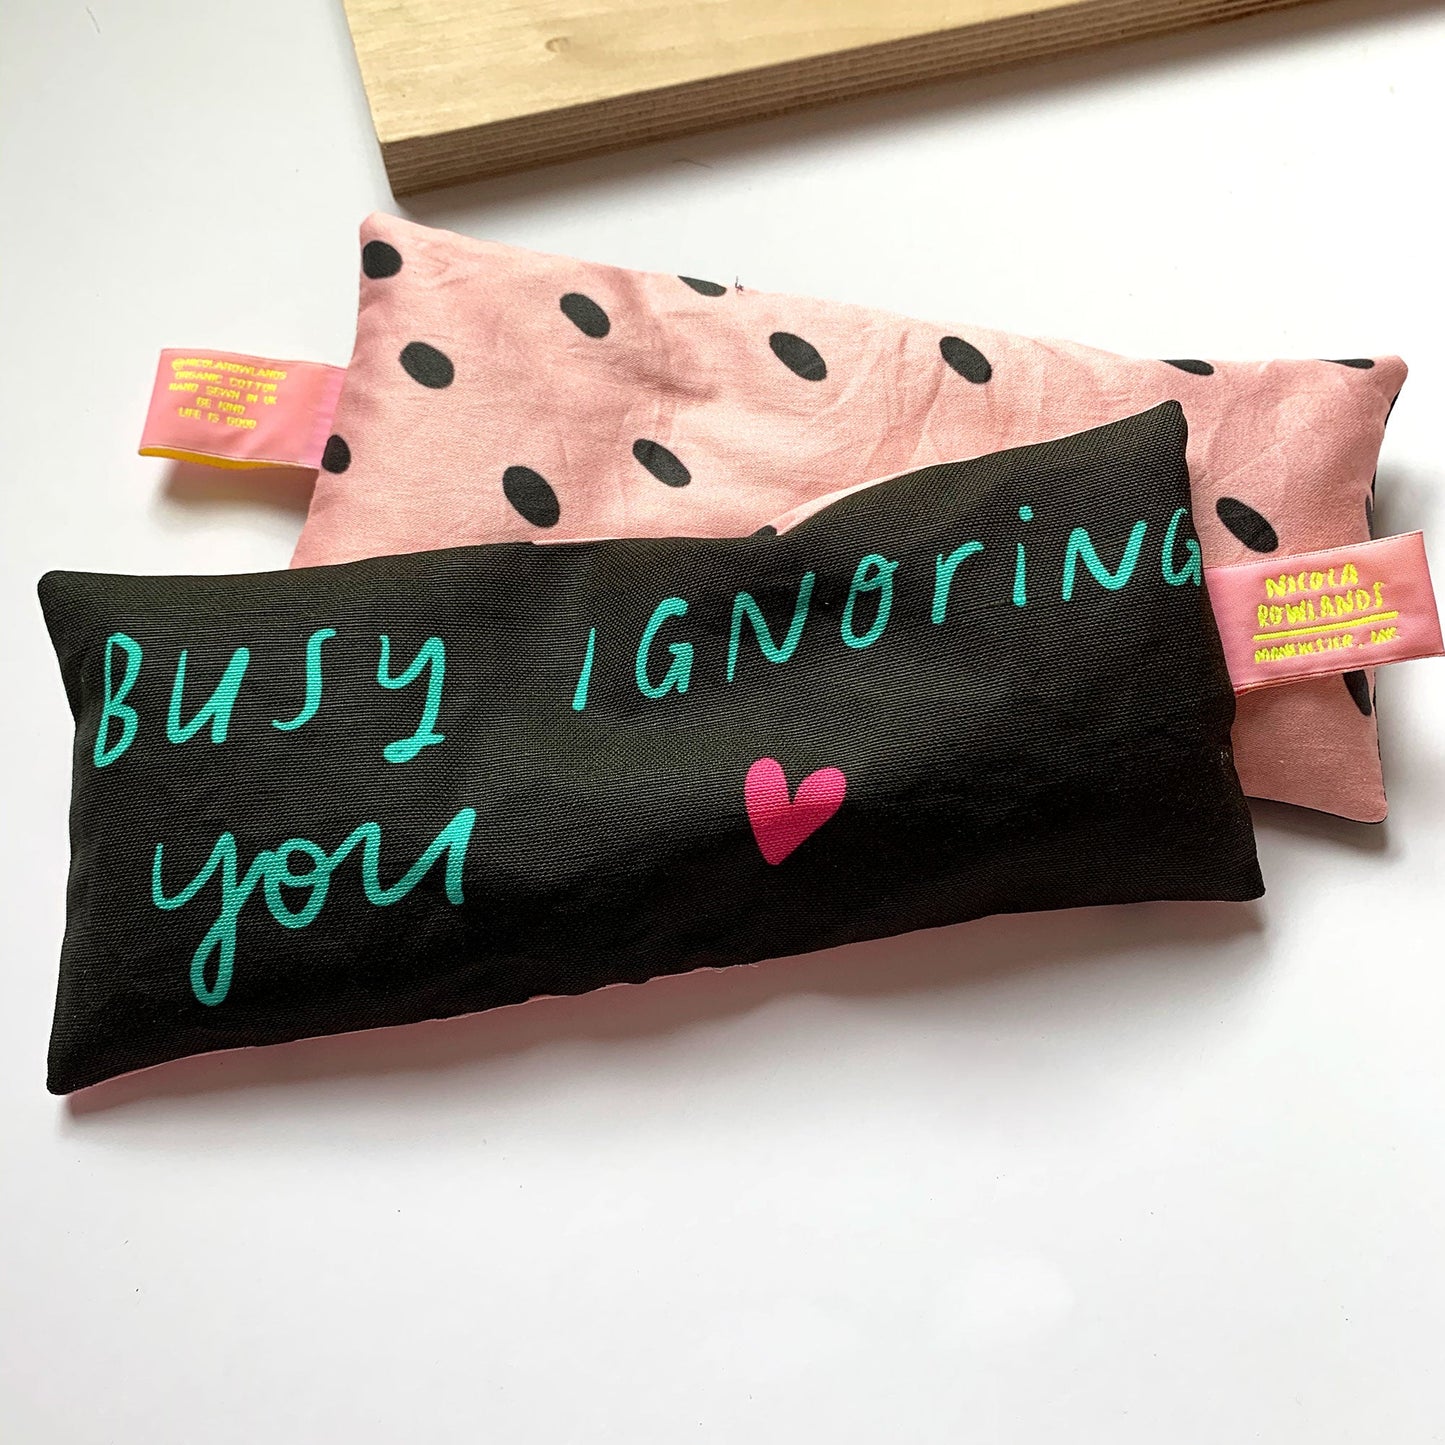 Handmade Lavender Bag: BUSY IGNORING YOU